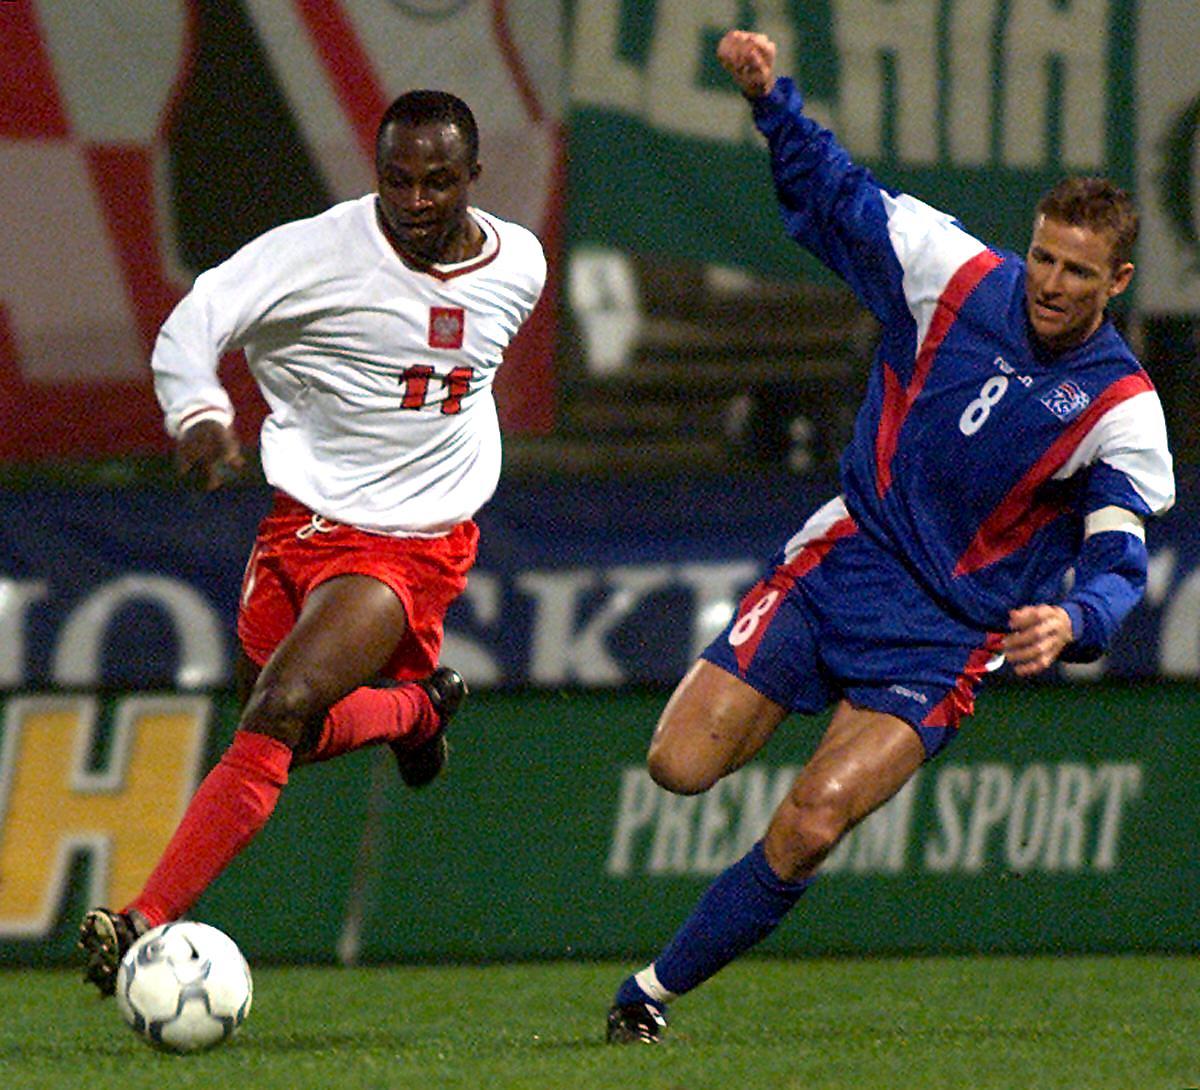 Emmanuel Olisadebe i Eyjólfur Sverrisson podczas meczu Polska - Islandia 1:0 (15.11.2000).